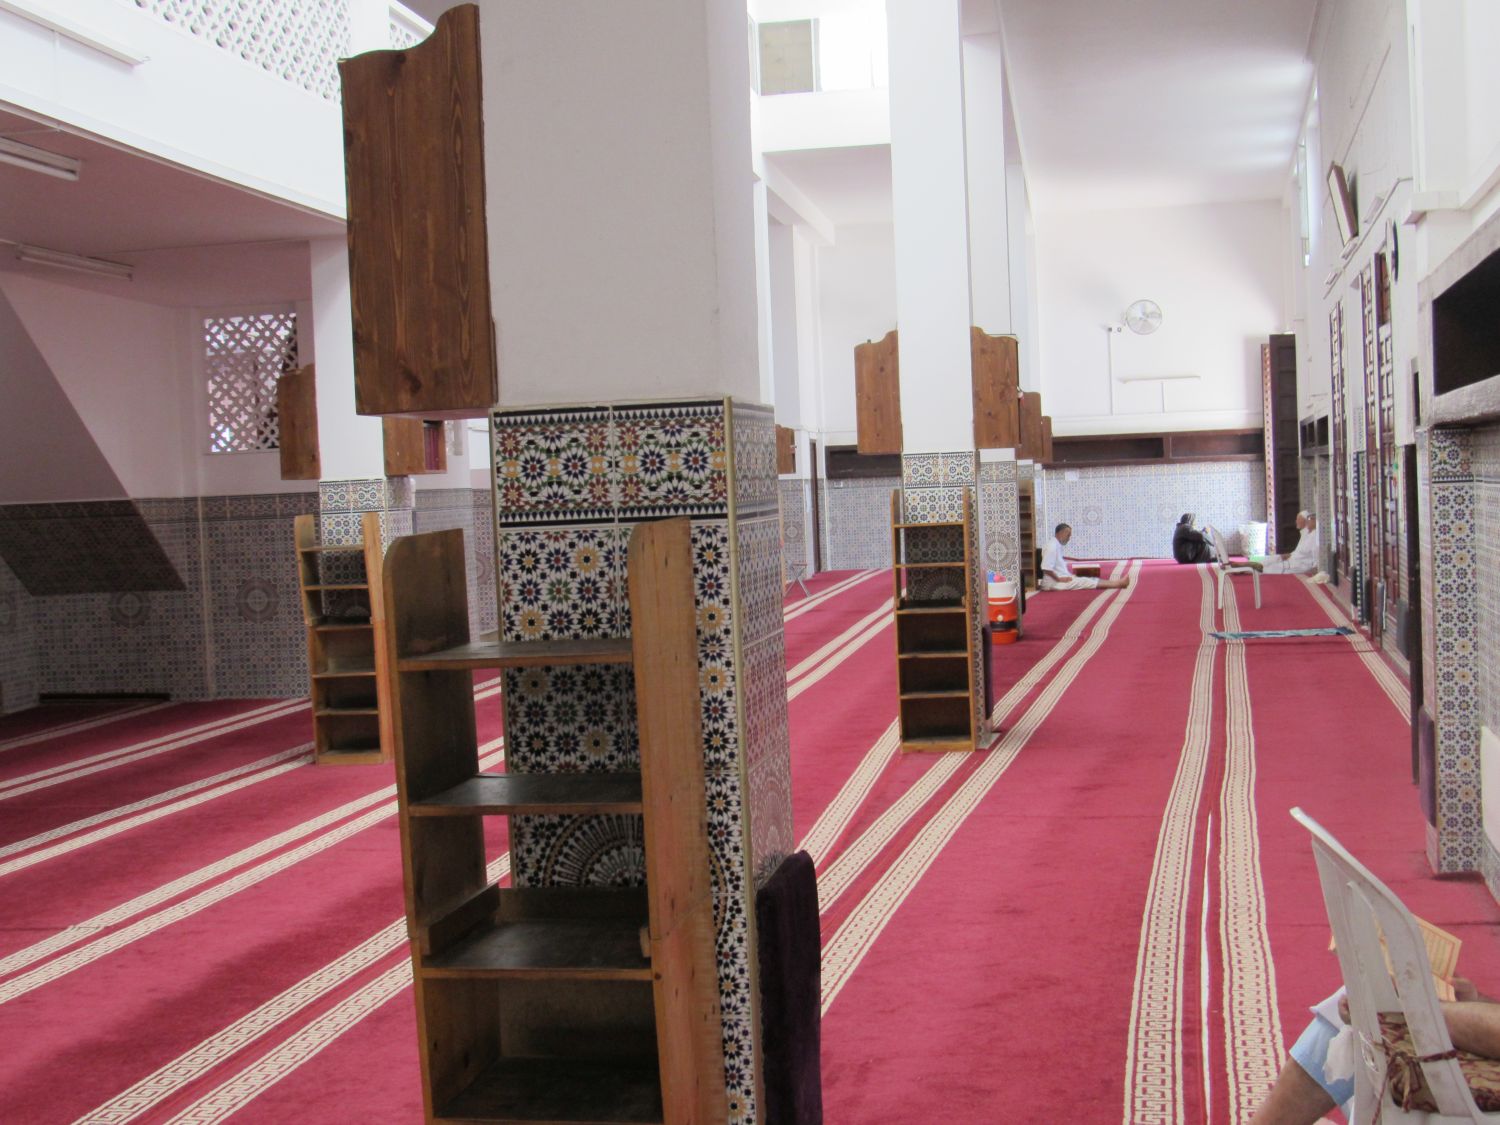 Mosquée El Mellah - Interior view, prayer hall.